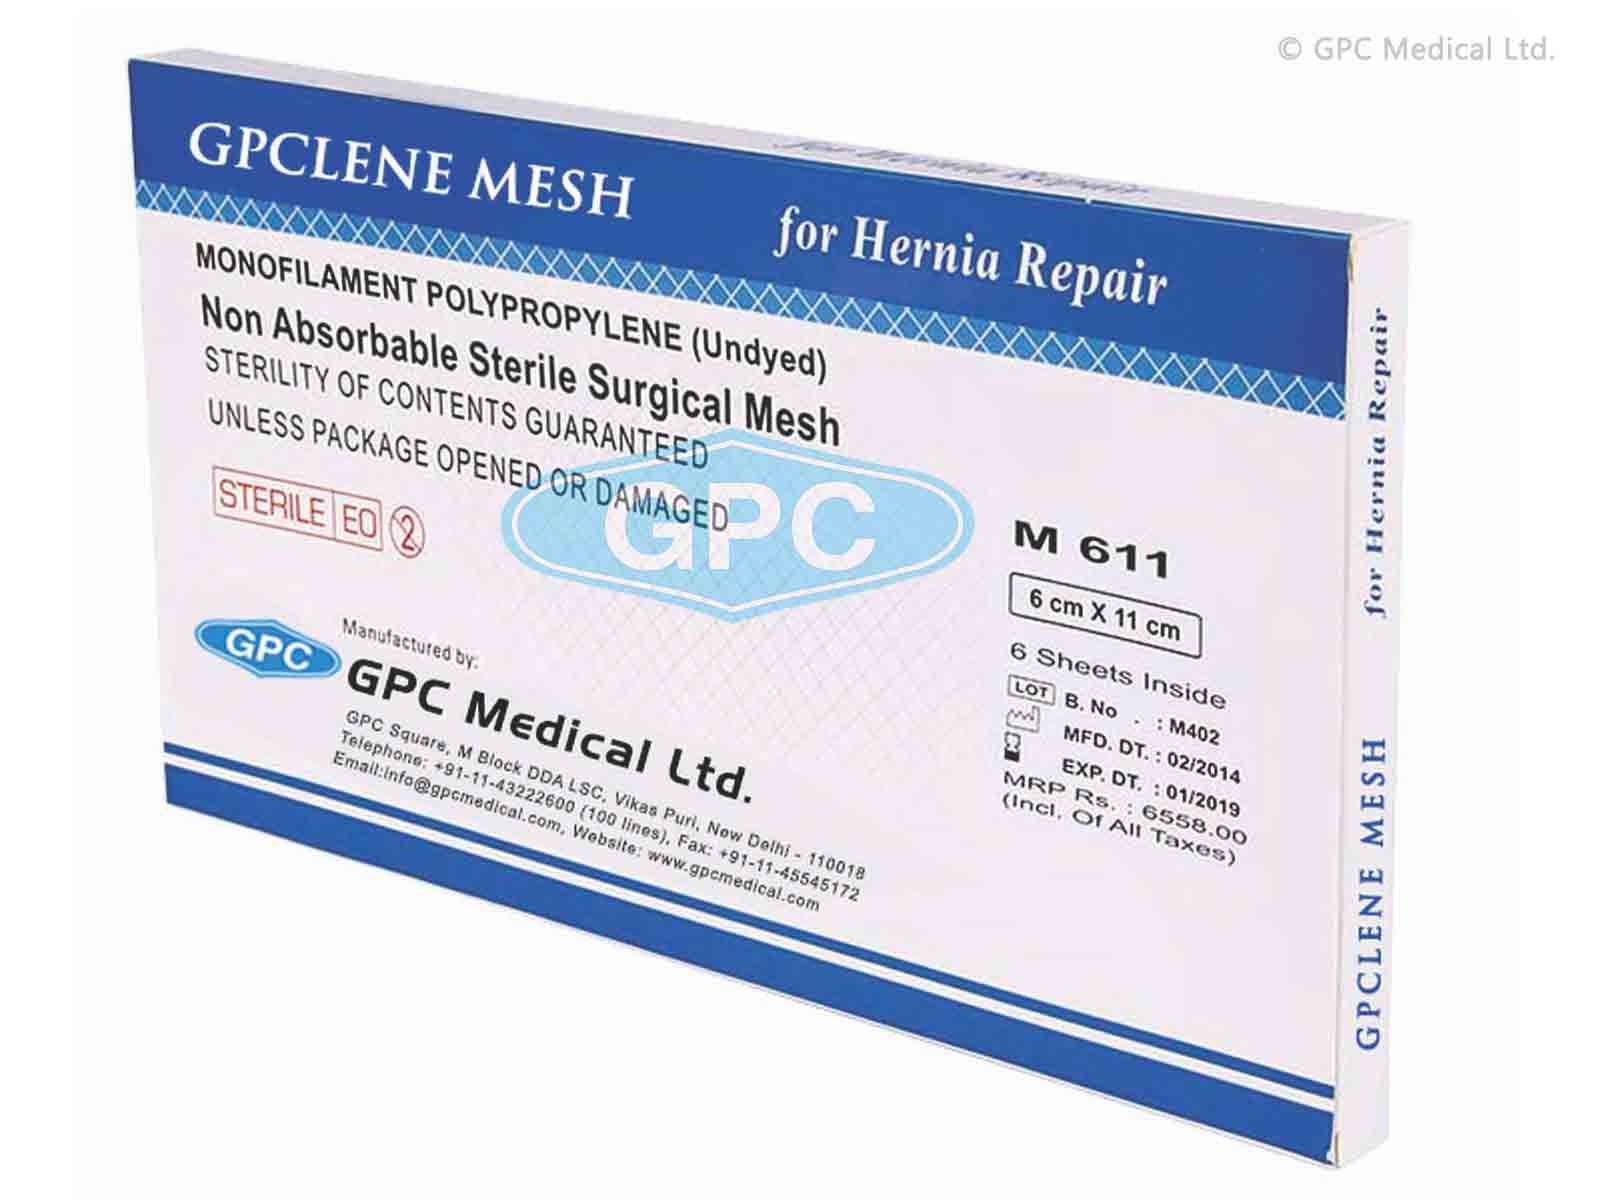 GPCLENE MESH - Non Absorbable Polypropylene Surgical Mesh